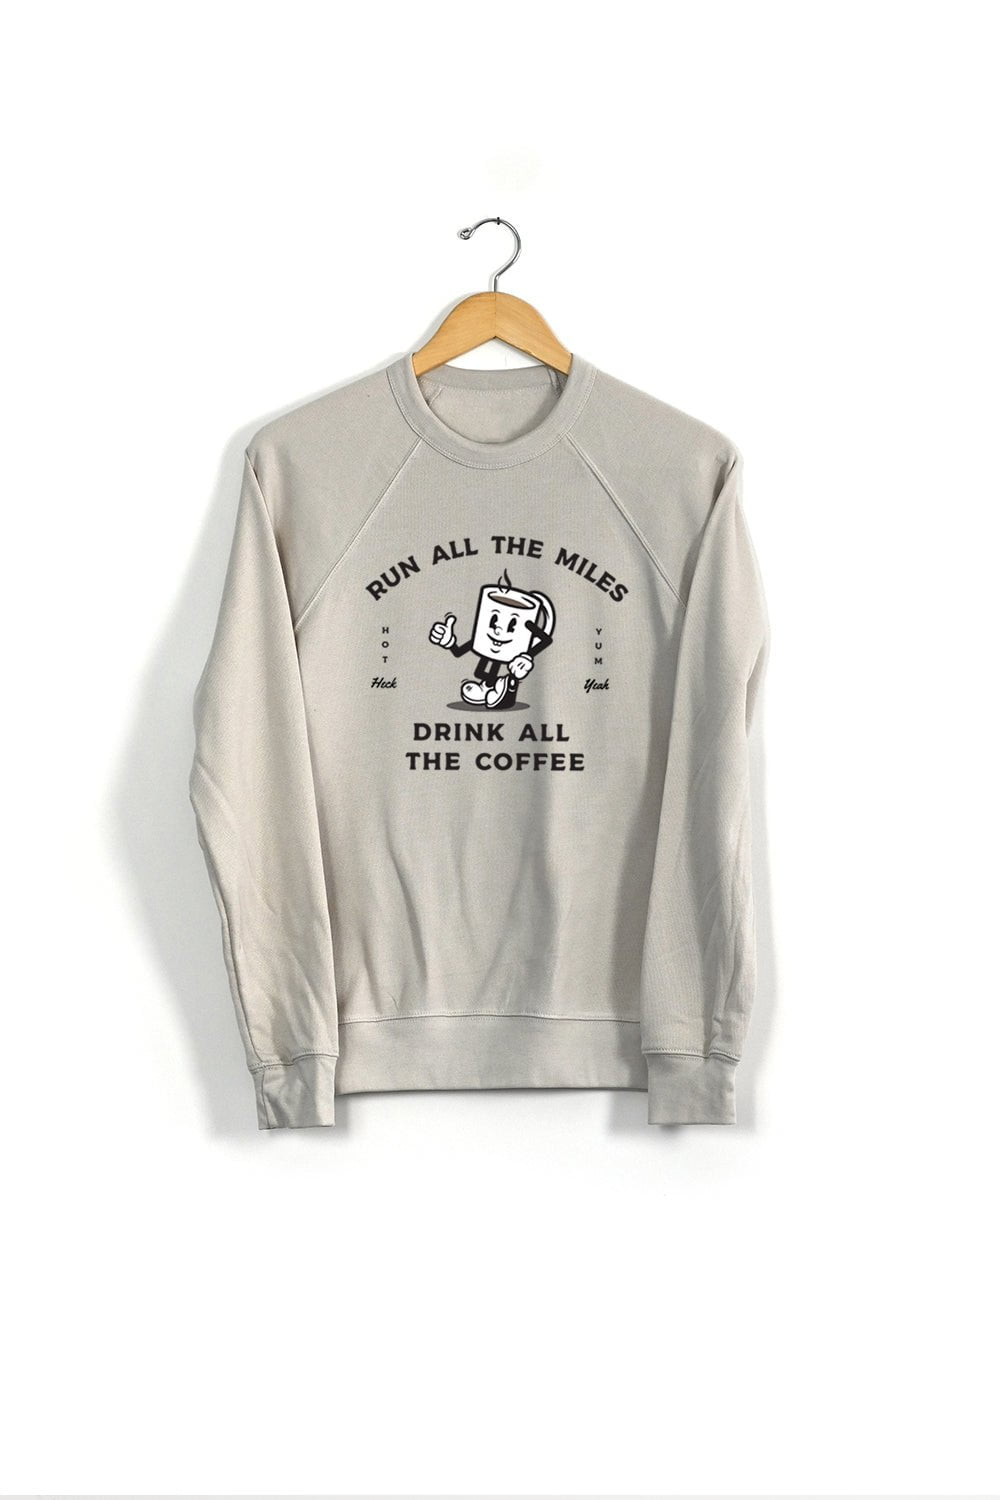 Sarah Marie Design Studio Sweatshirt Run All The Miles, Drink All The Coffee Unisex Sweatshirt